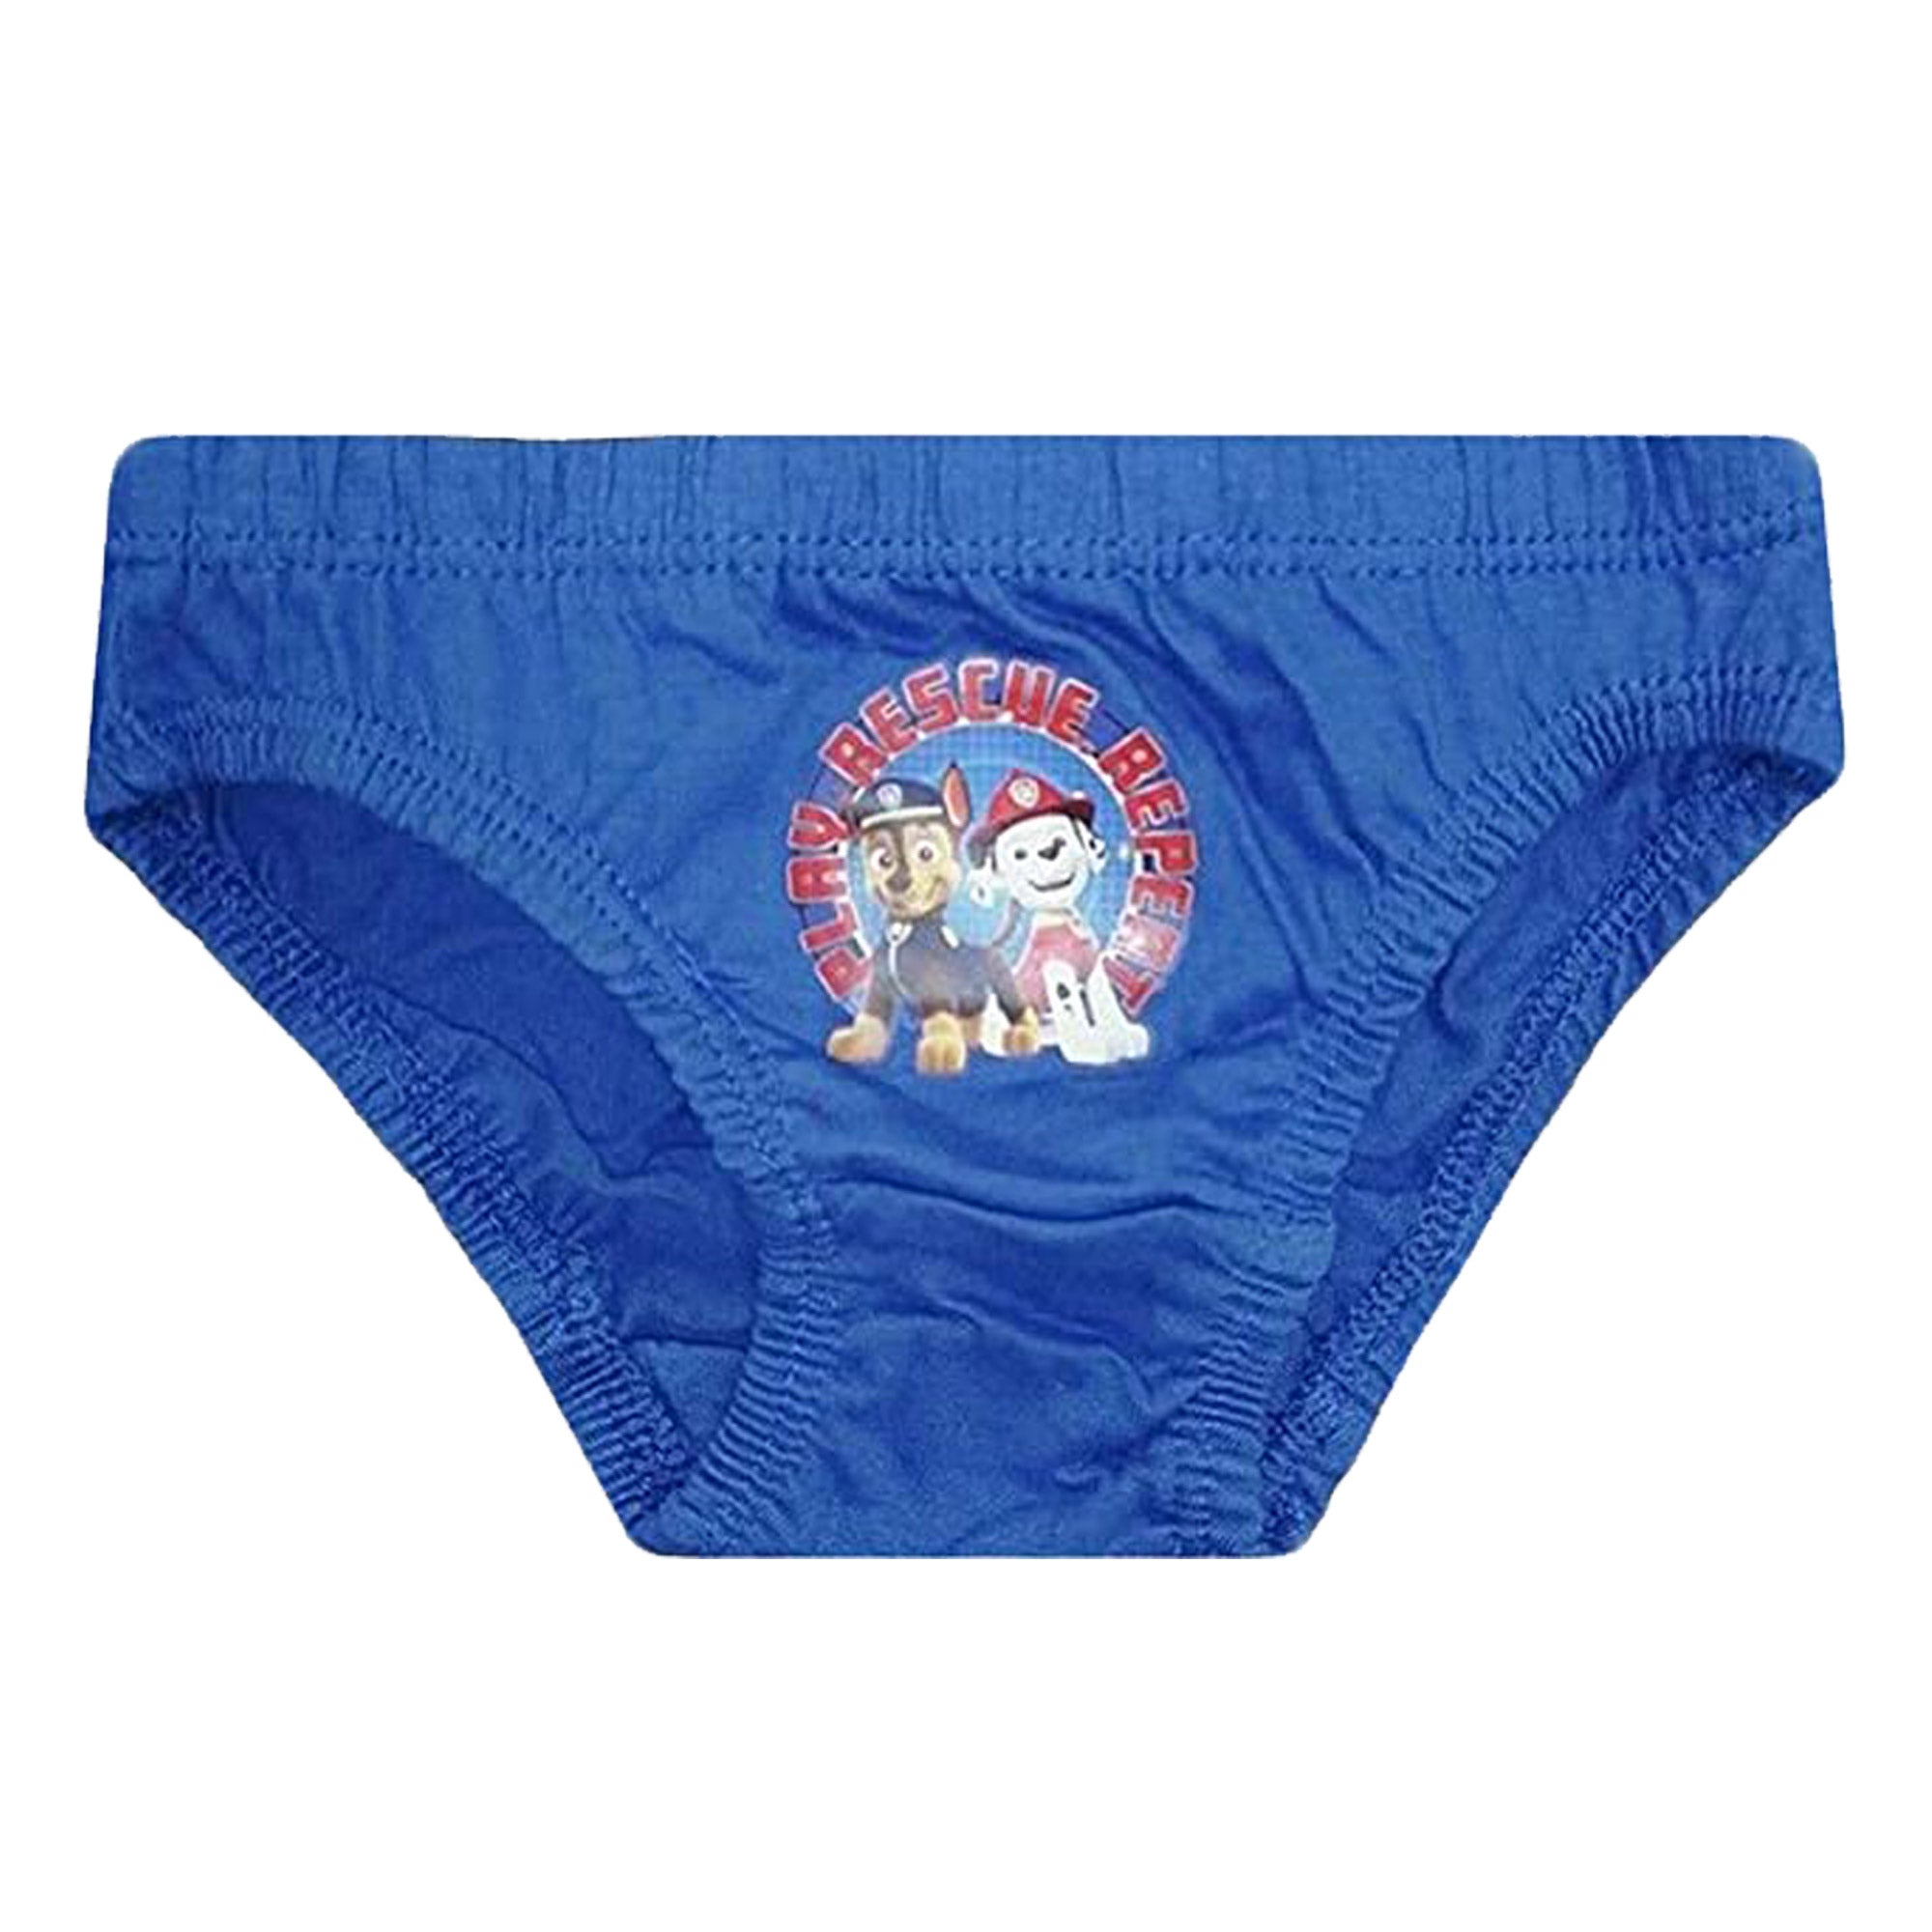 Paw Patrol Kids Underwear Briefs Pants Blue 3 Pack Sizes 18 months to 5 Years Blue detail